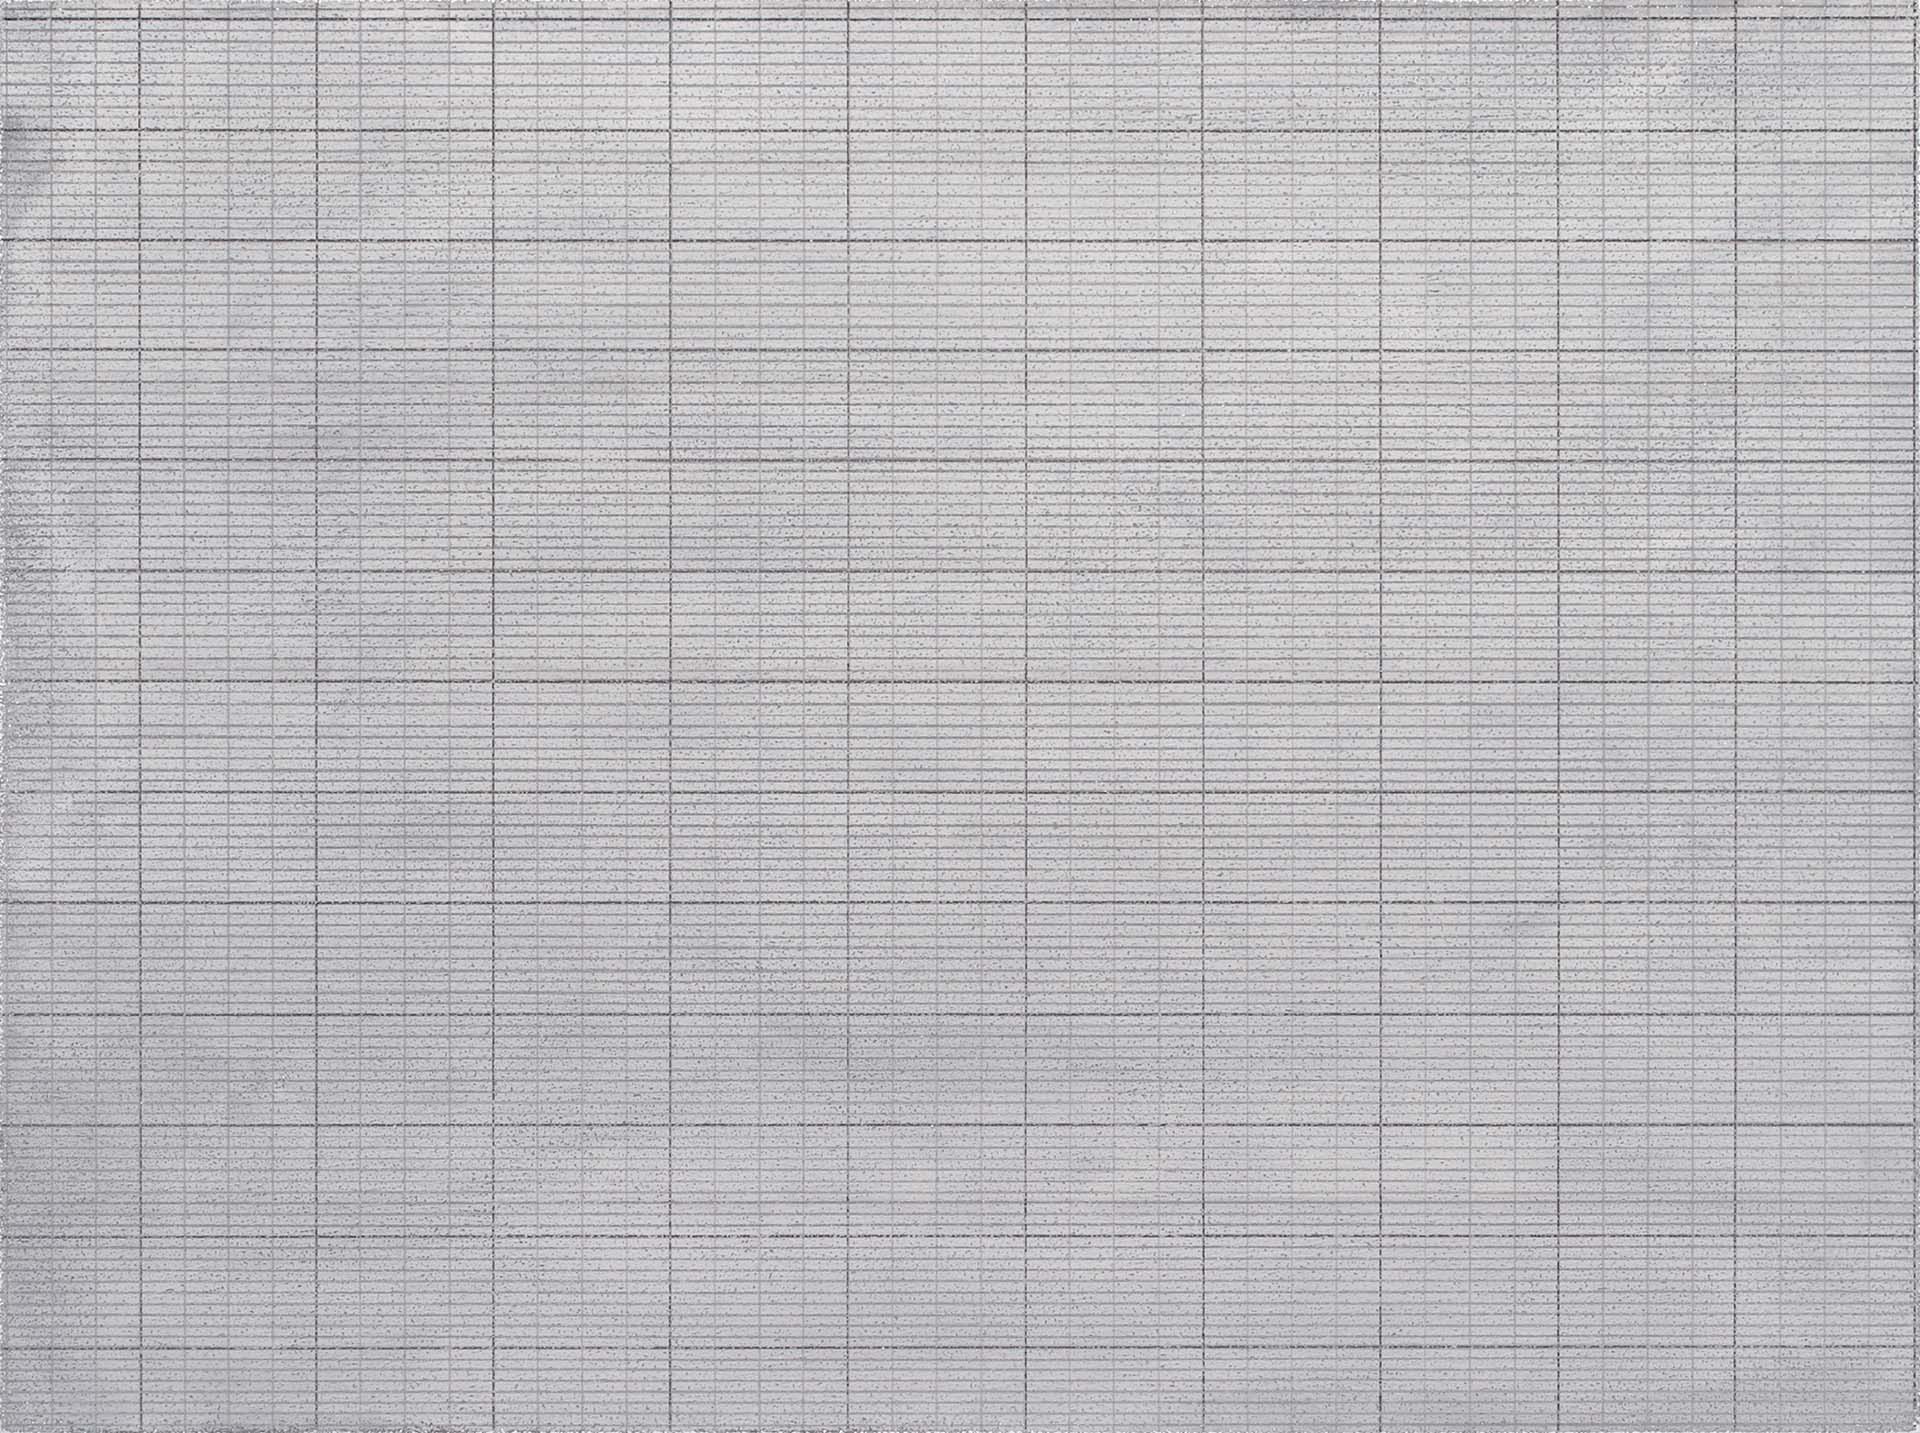  Grid 25, 2014, acrylic on aluminium, 325 x 435mm 